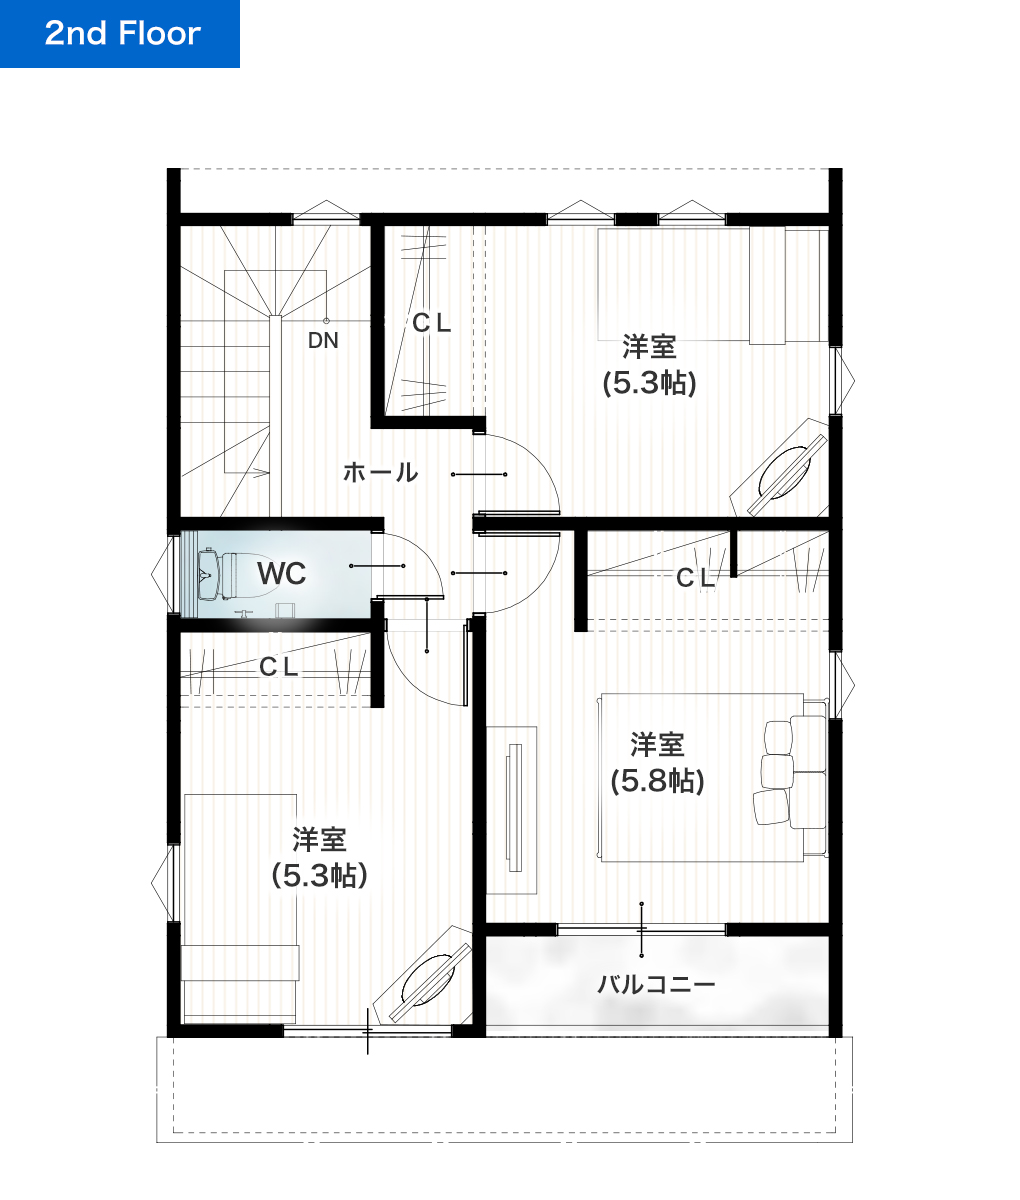 熊本市南区良町2丁目 26坪 4LDK 建売・一戸建ての新築物件 2階間取り図